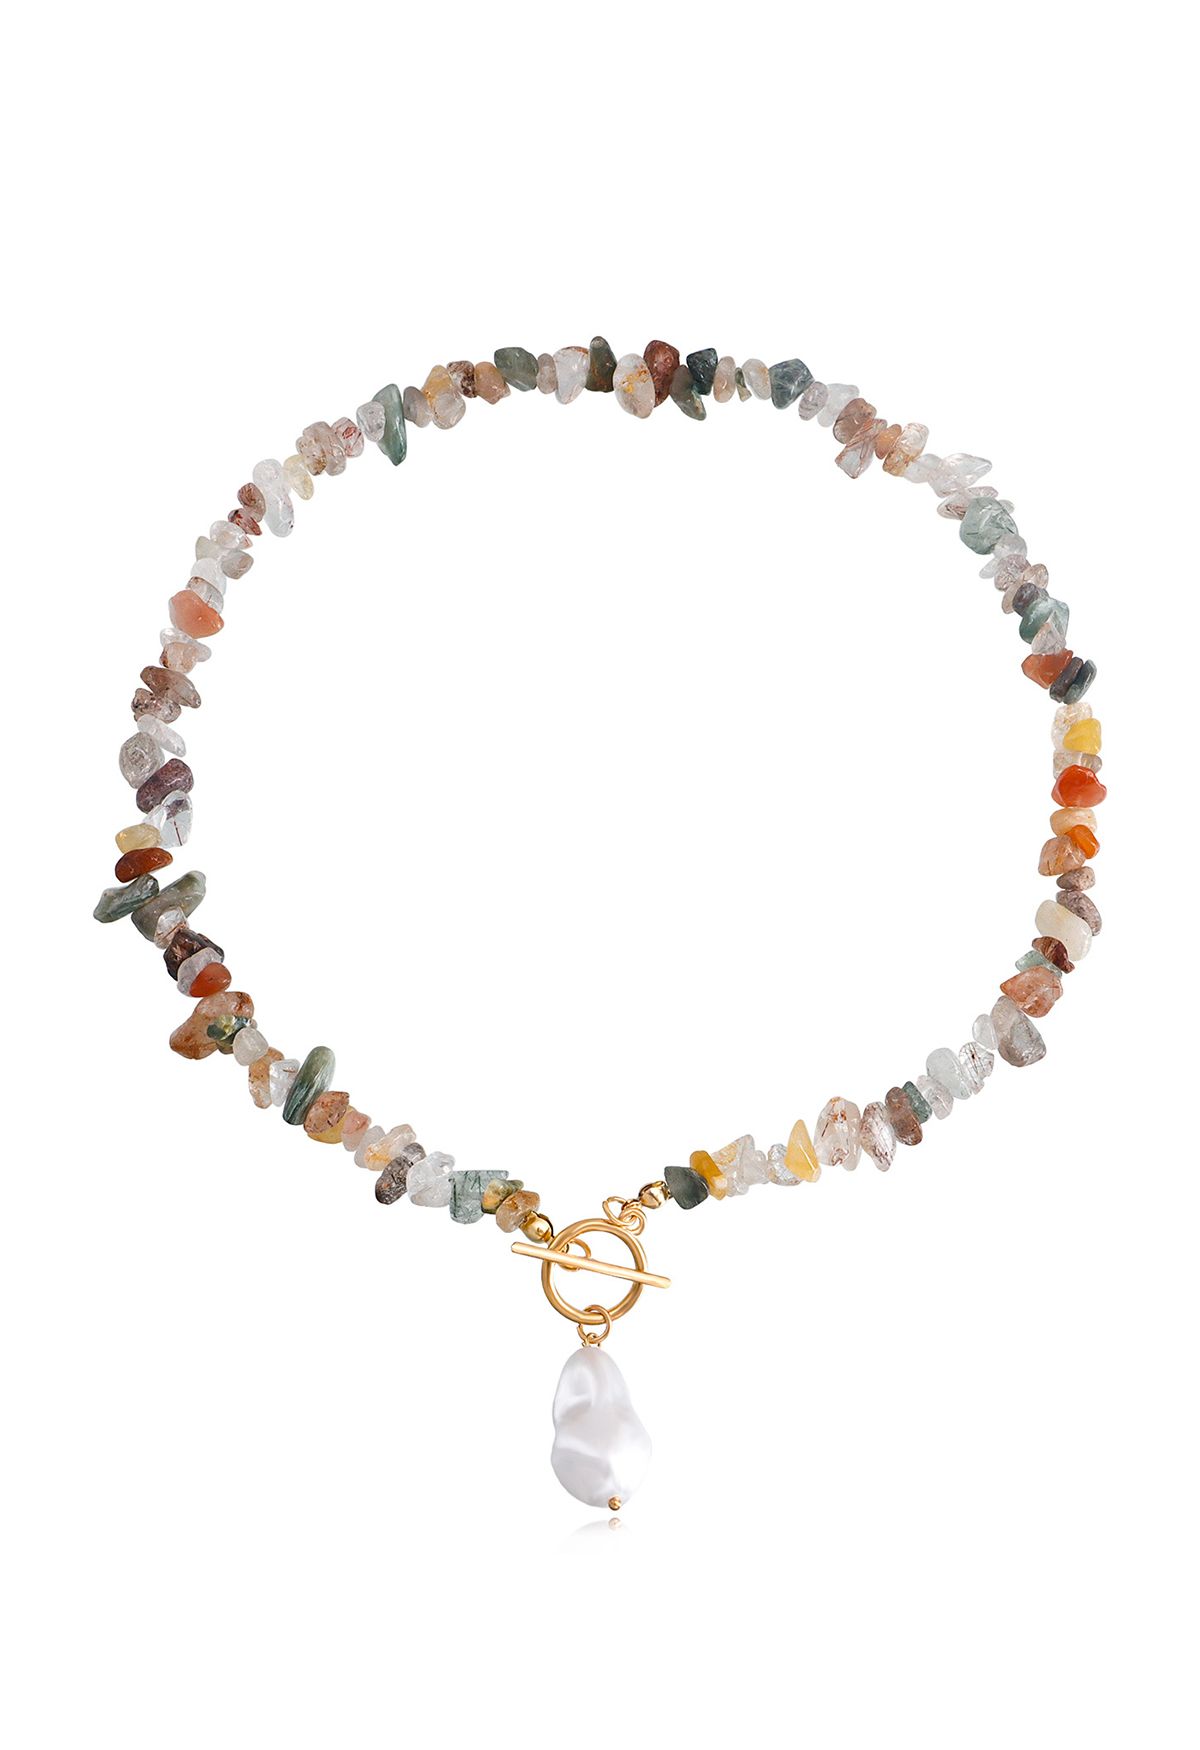 Collier de perles multicolores en pierre naturelle